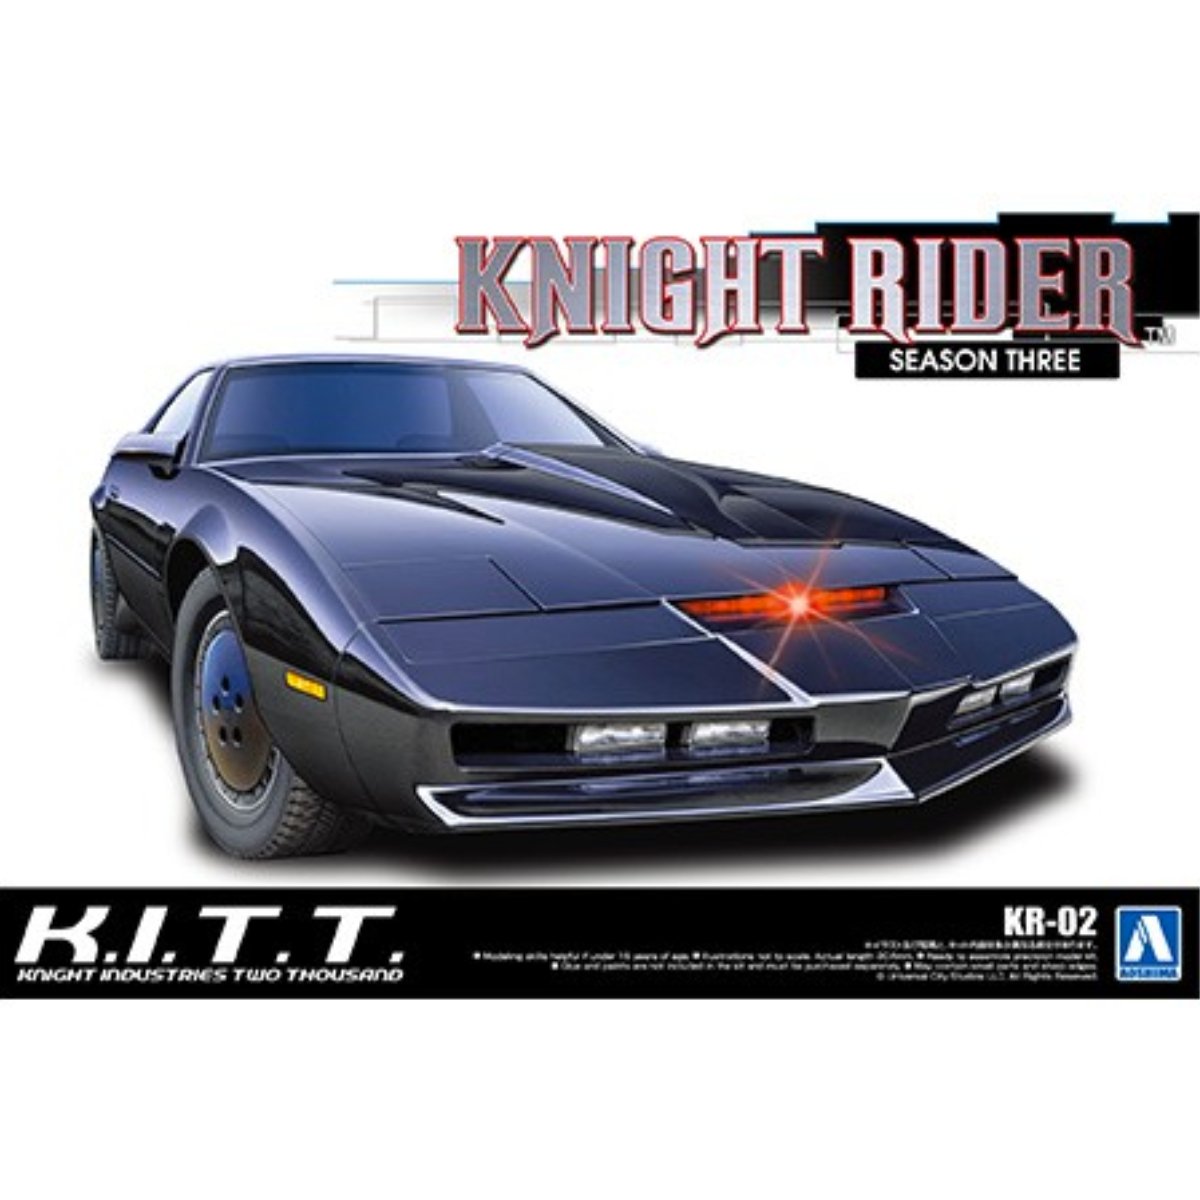 Aoshima Knight Rider Knight 2000 K.I.T.T. Season III Plastic Kit - 1:24 Scale - Phillips Hobbies